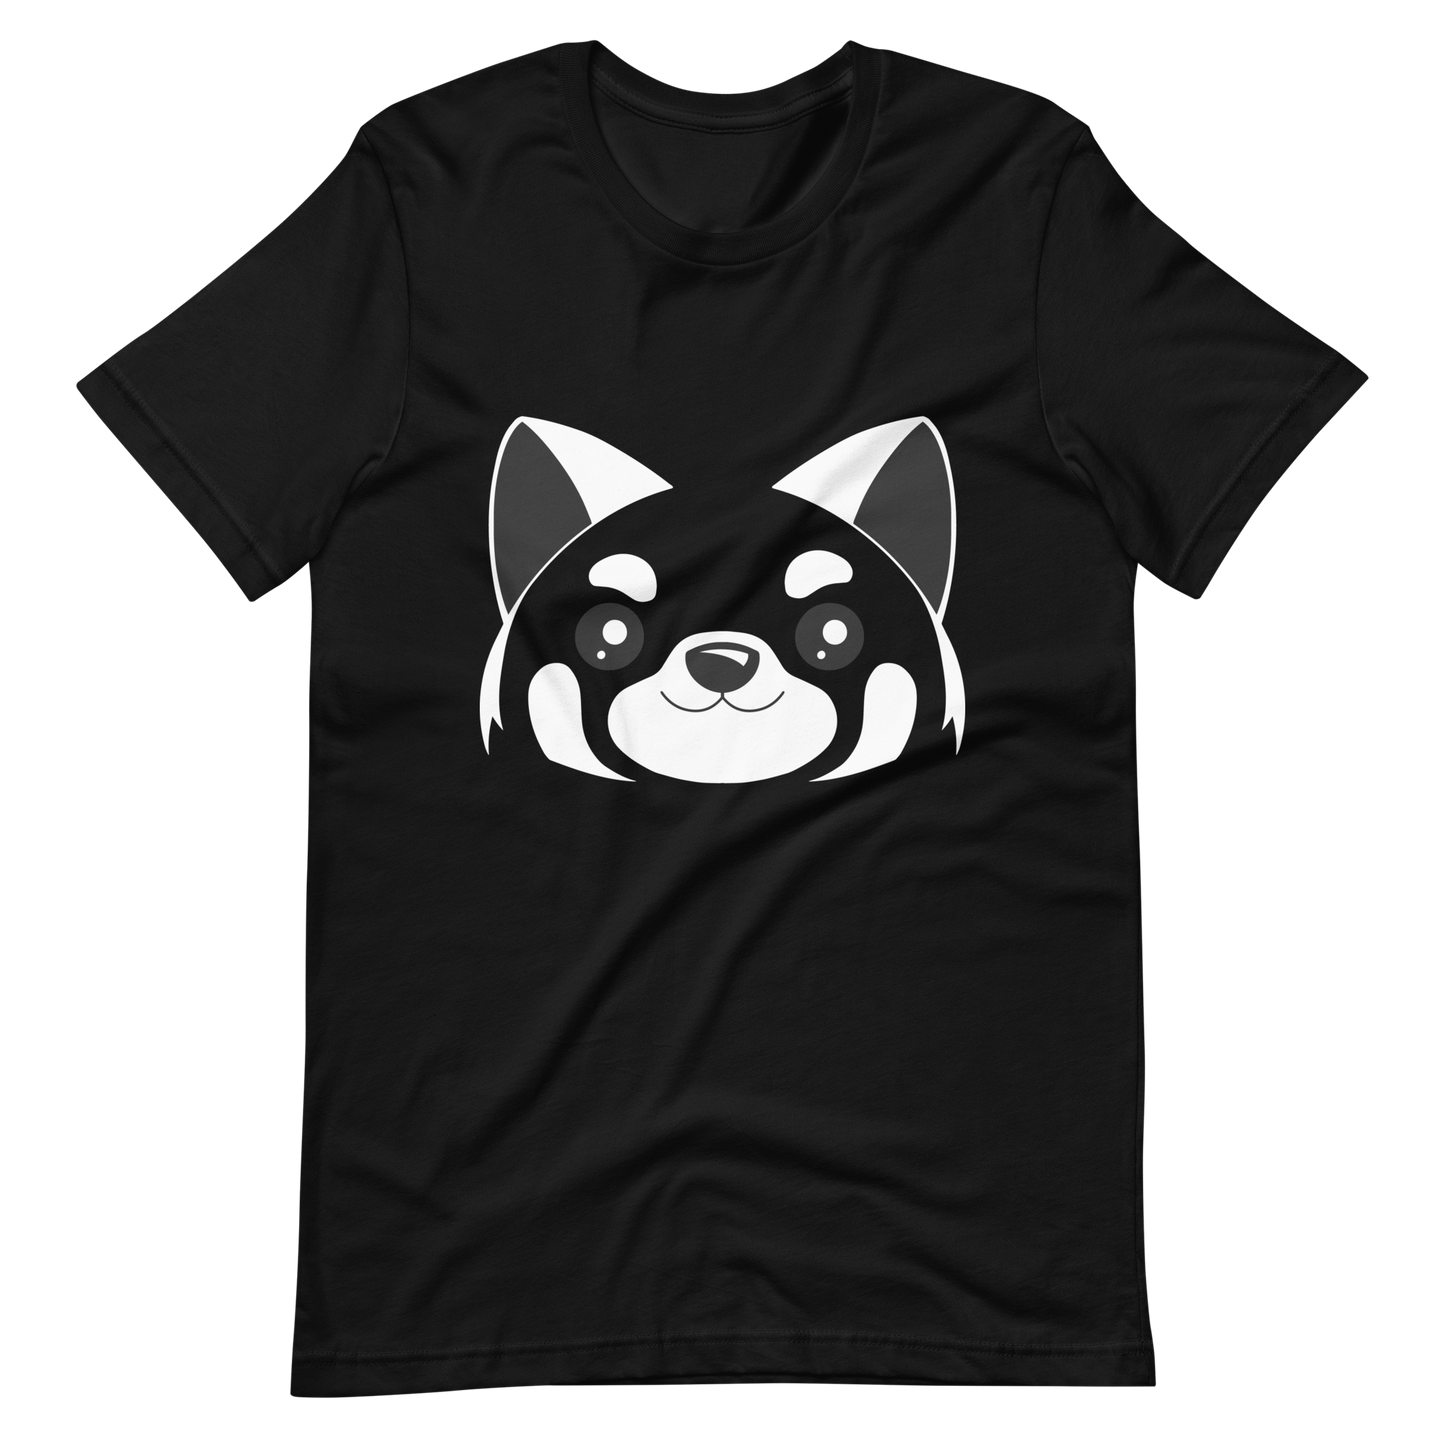 Red panda face | Unisex t-shirt